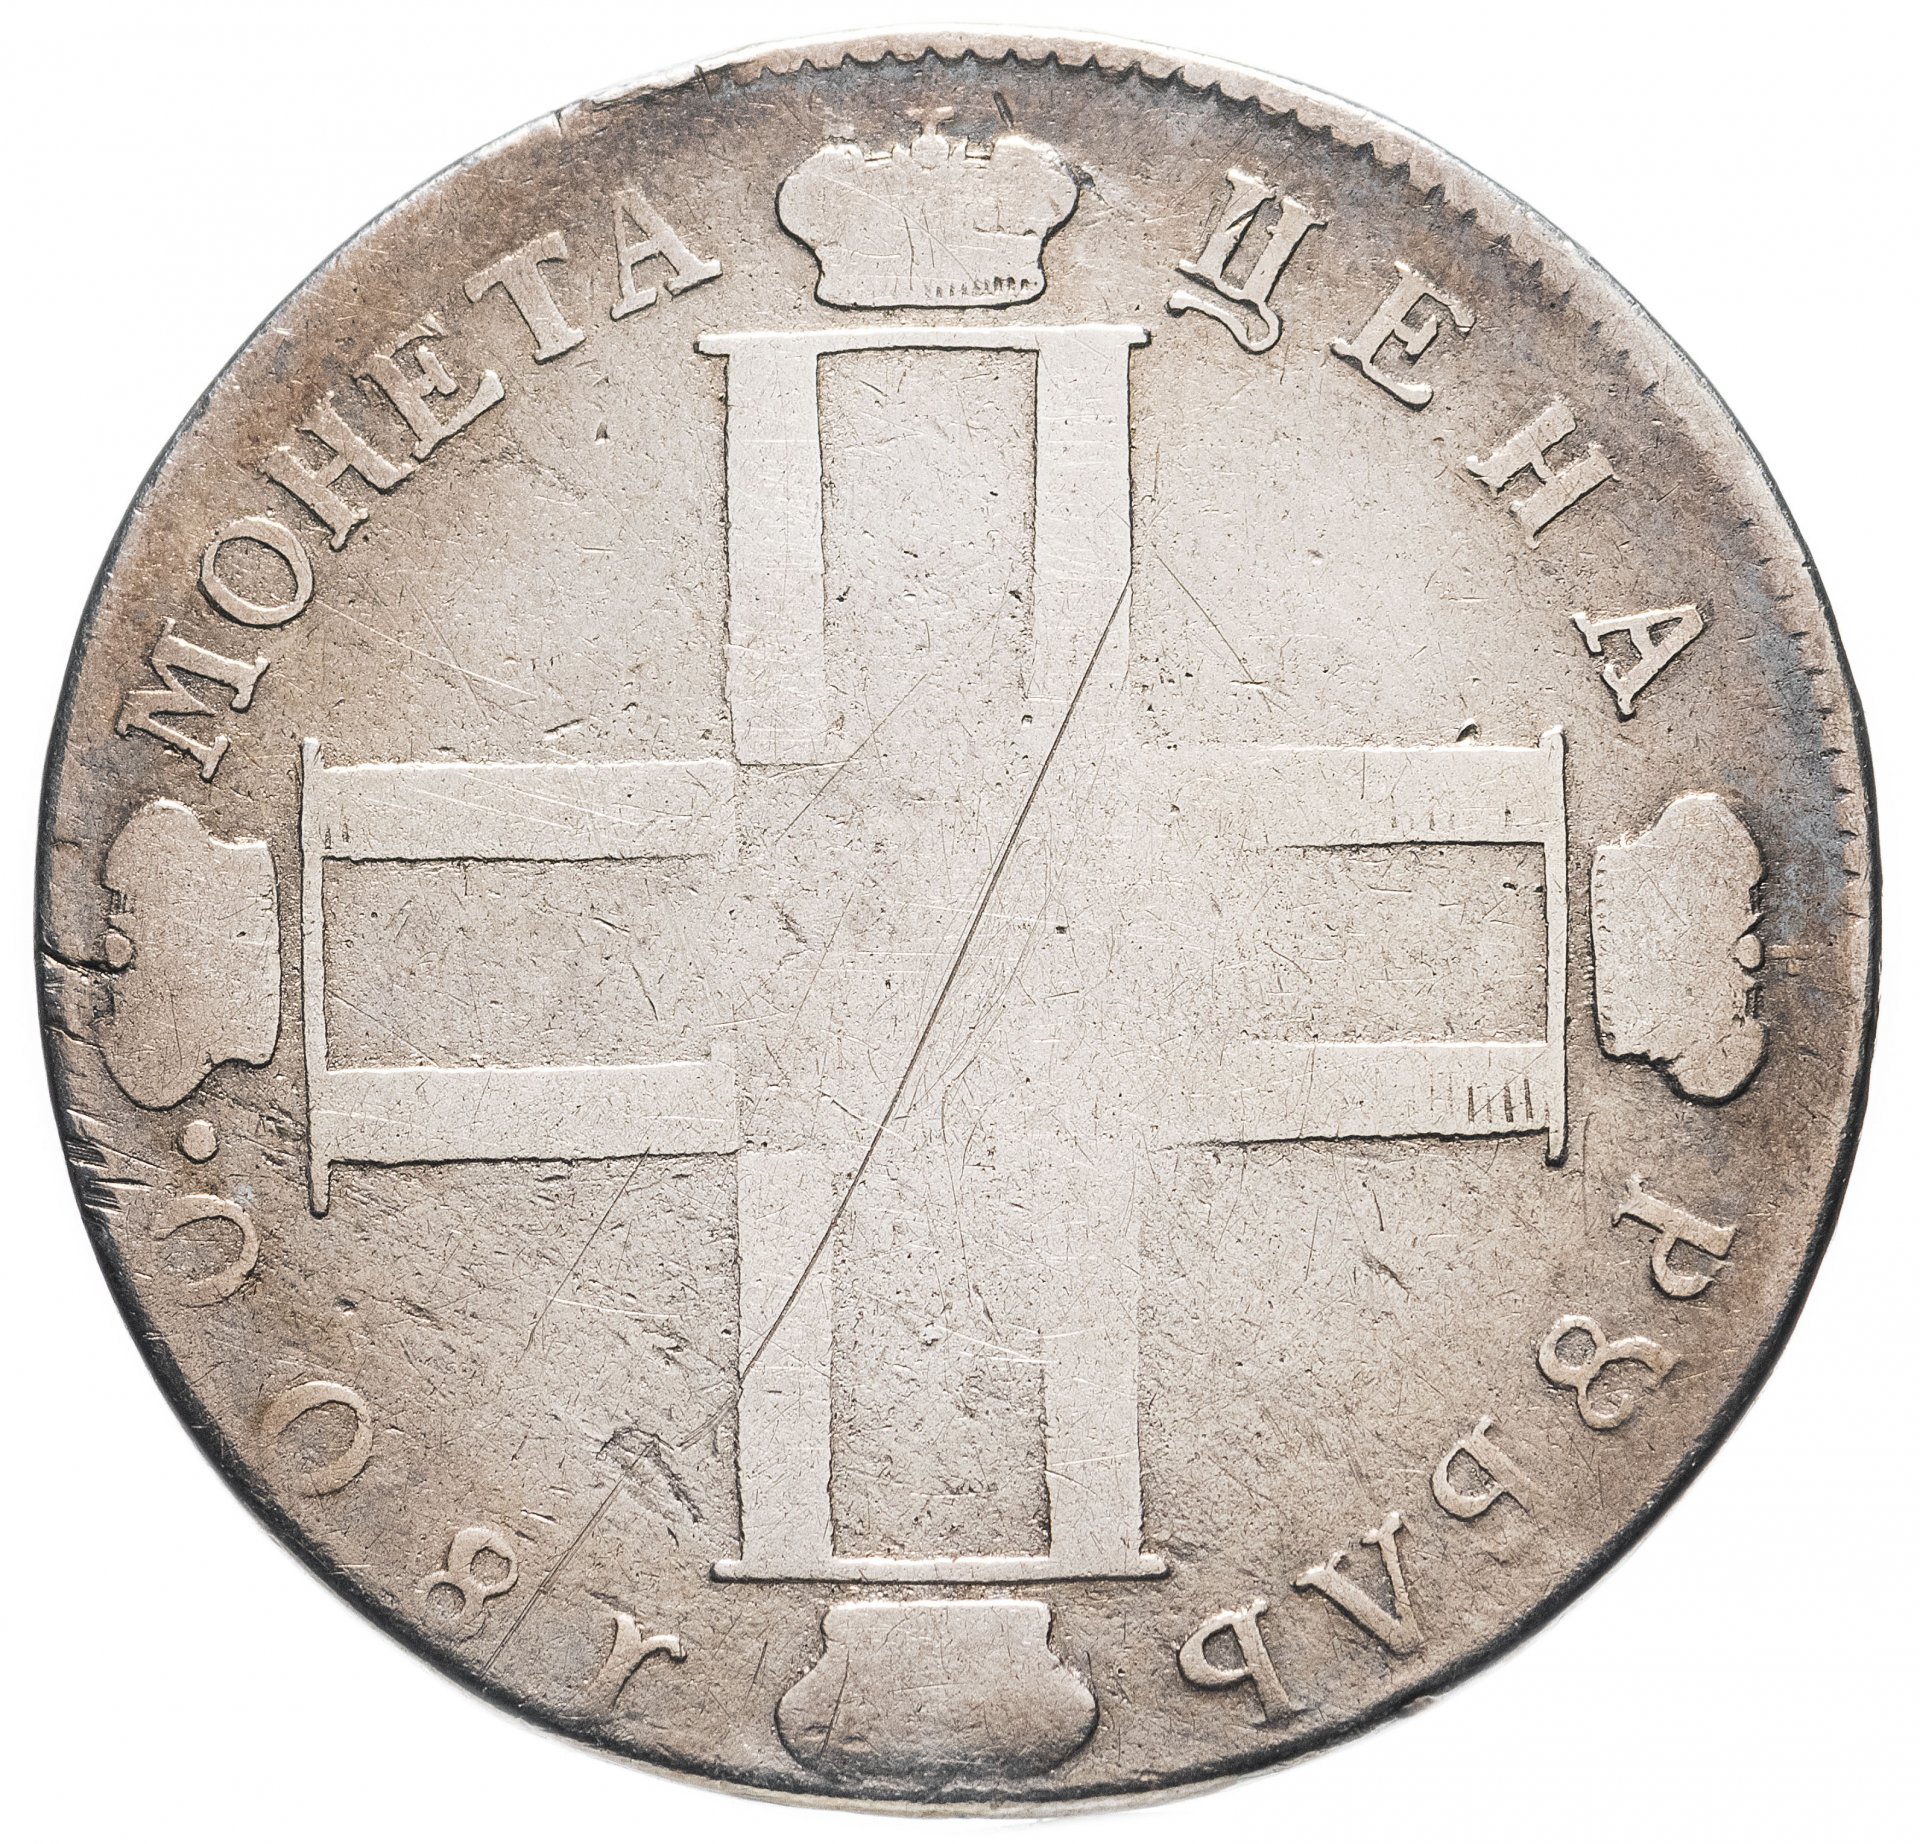 Рубль 1800 год. Серебро 1800 1 рубль. Монеты 1800 года. Монета 1800 серебро. Монета 1 рубль 1800 года.